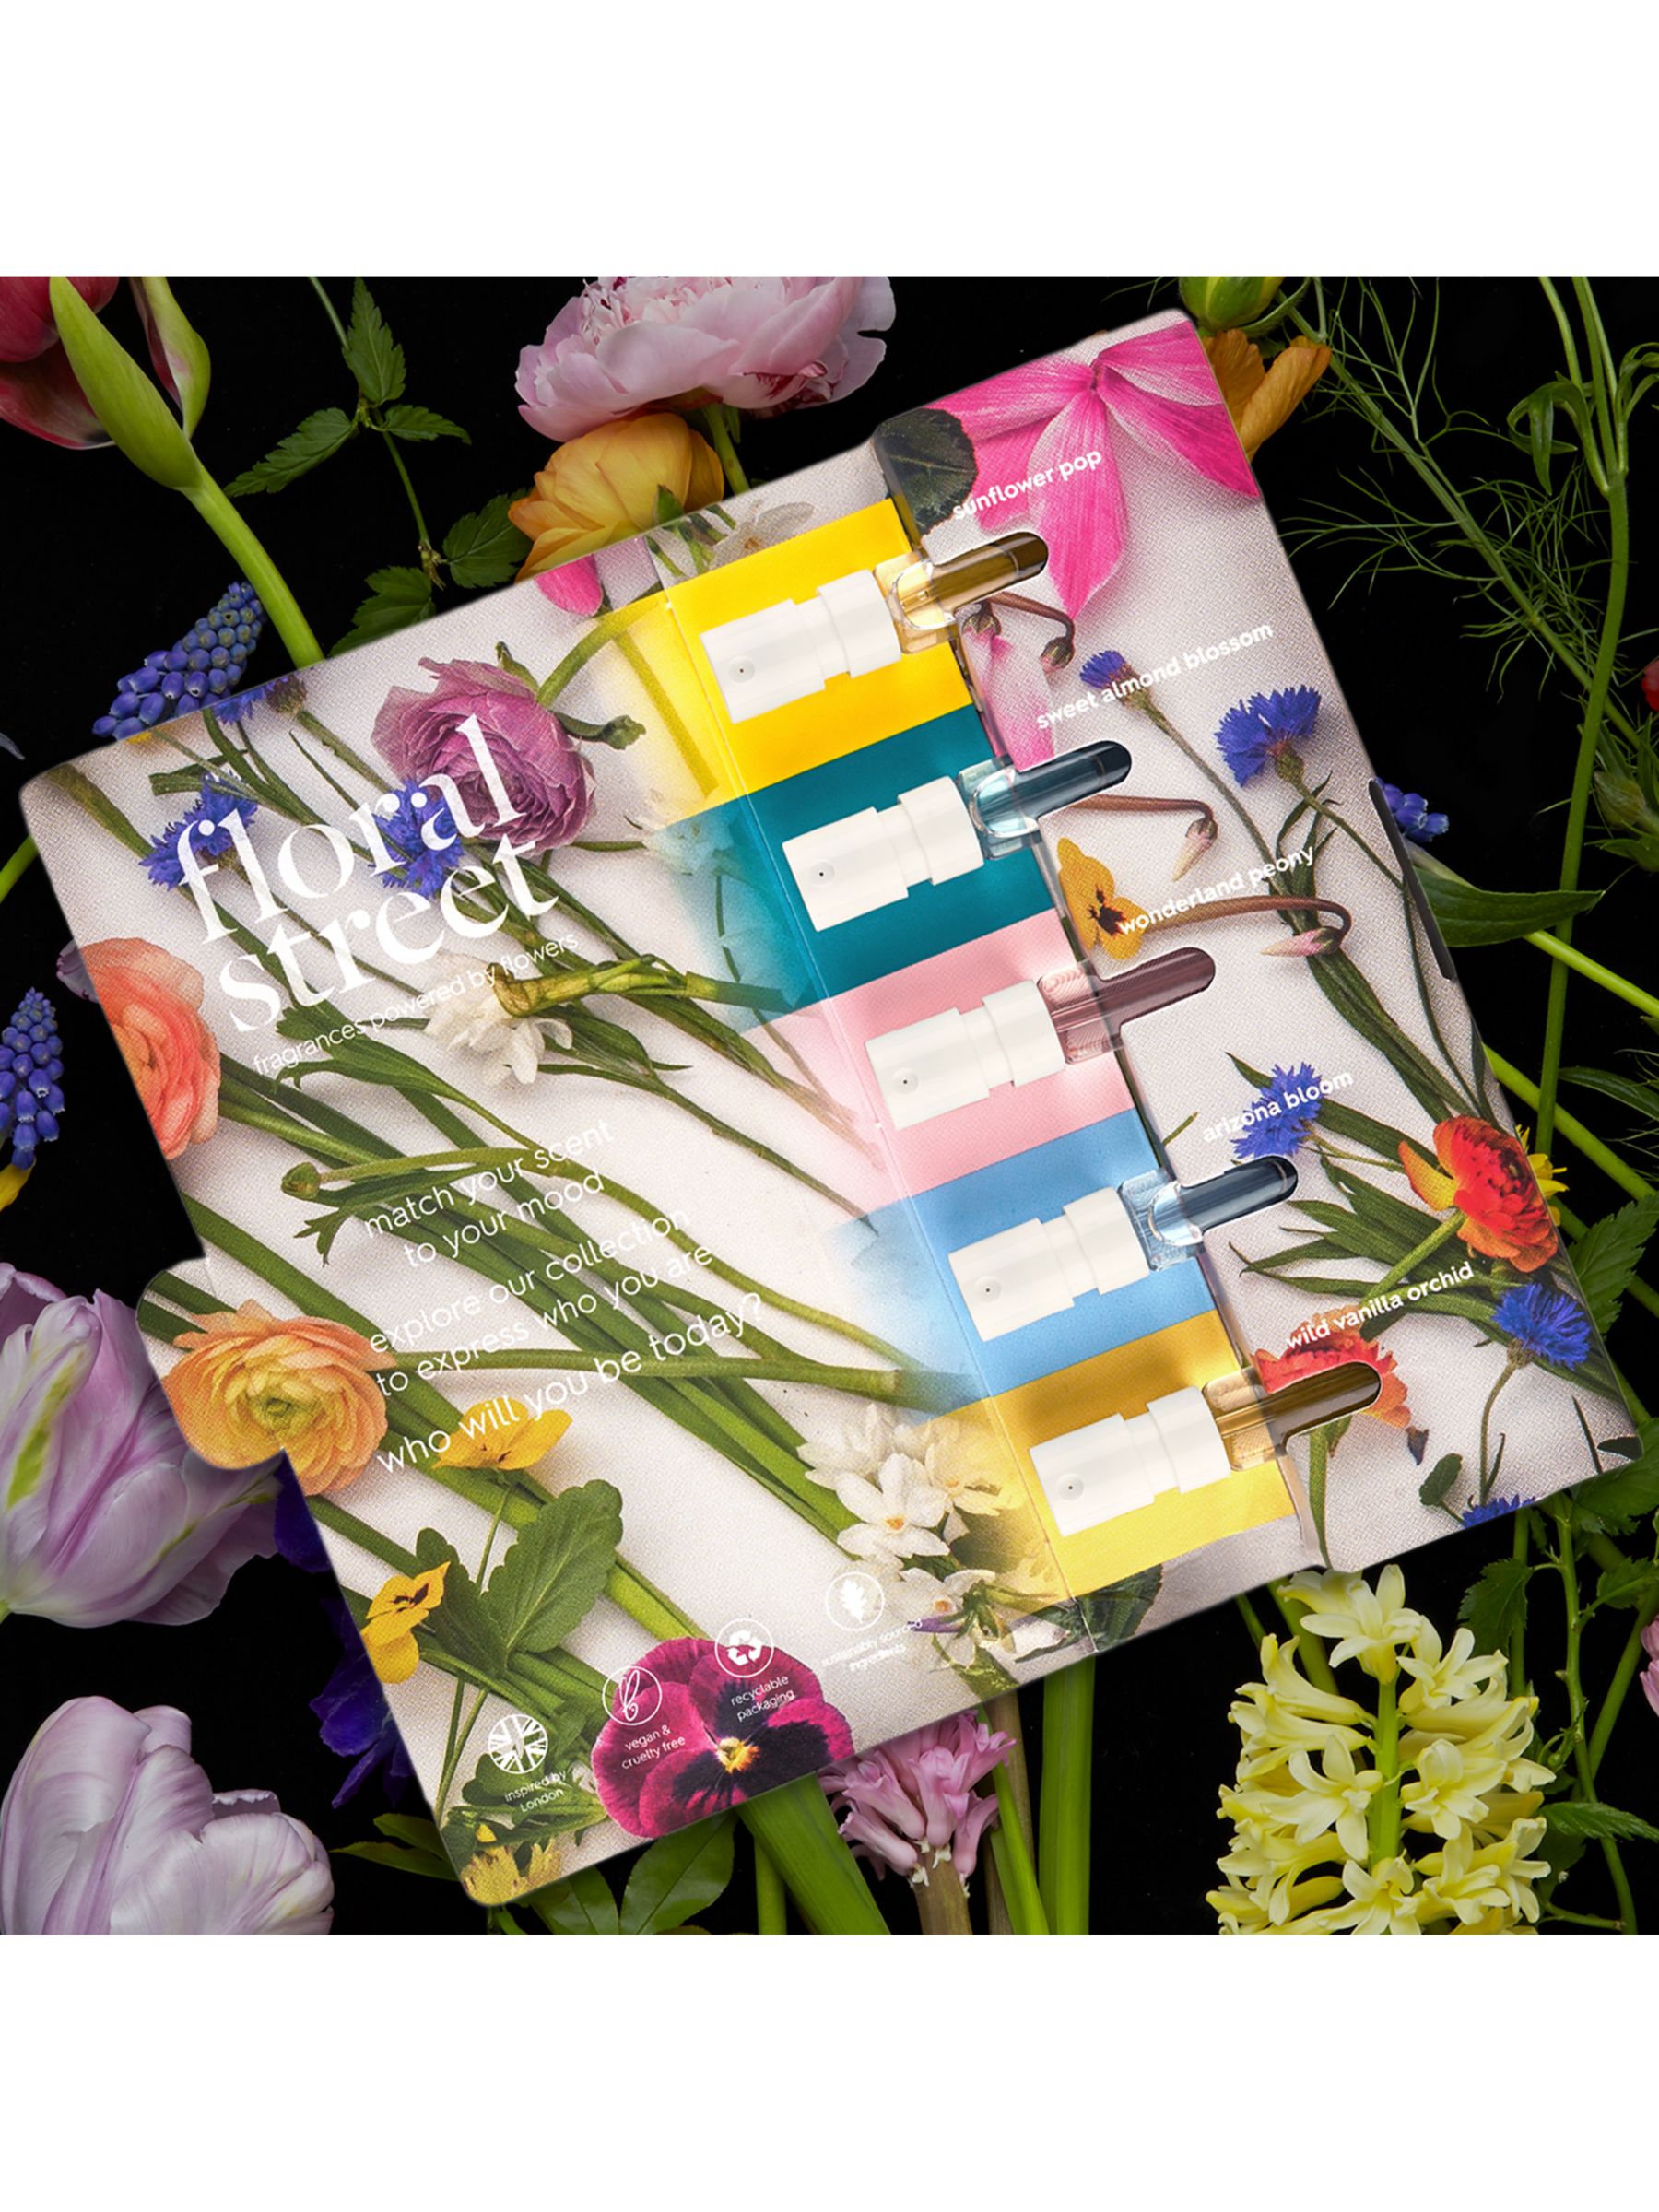 Floral Street Discovery Eau de Parfum Fragrance Gift Set, 5 x 2ml